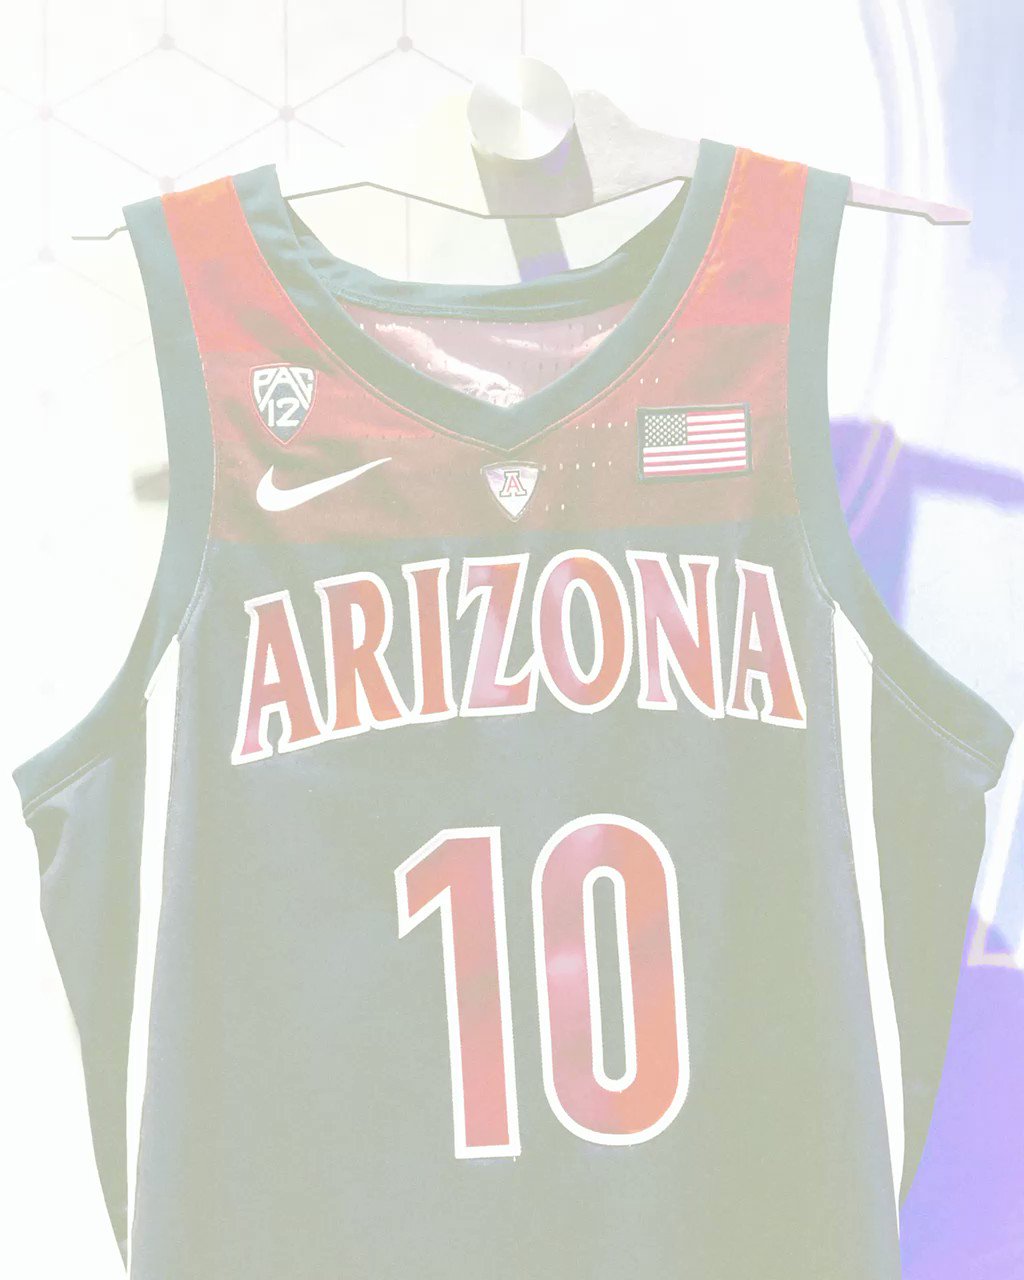 To wipe the gradients off their basketball uniforms, Arizona